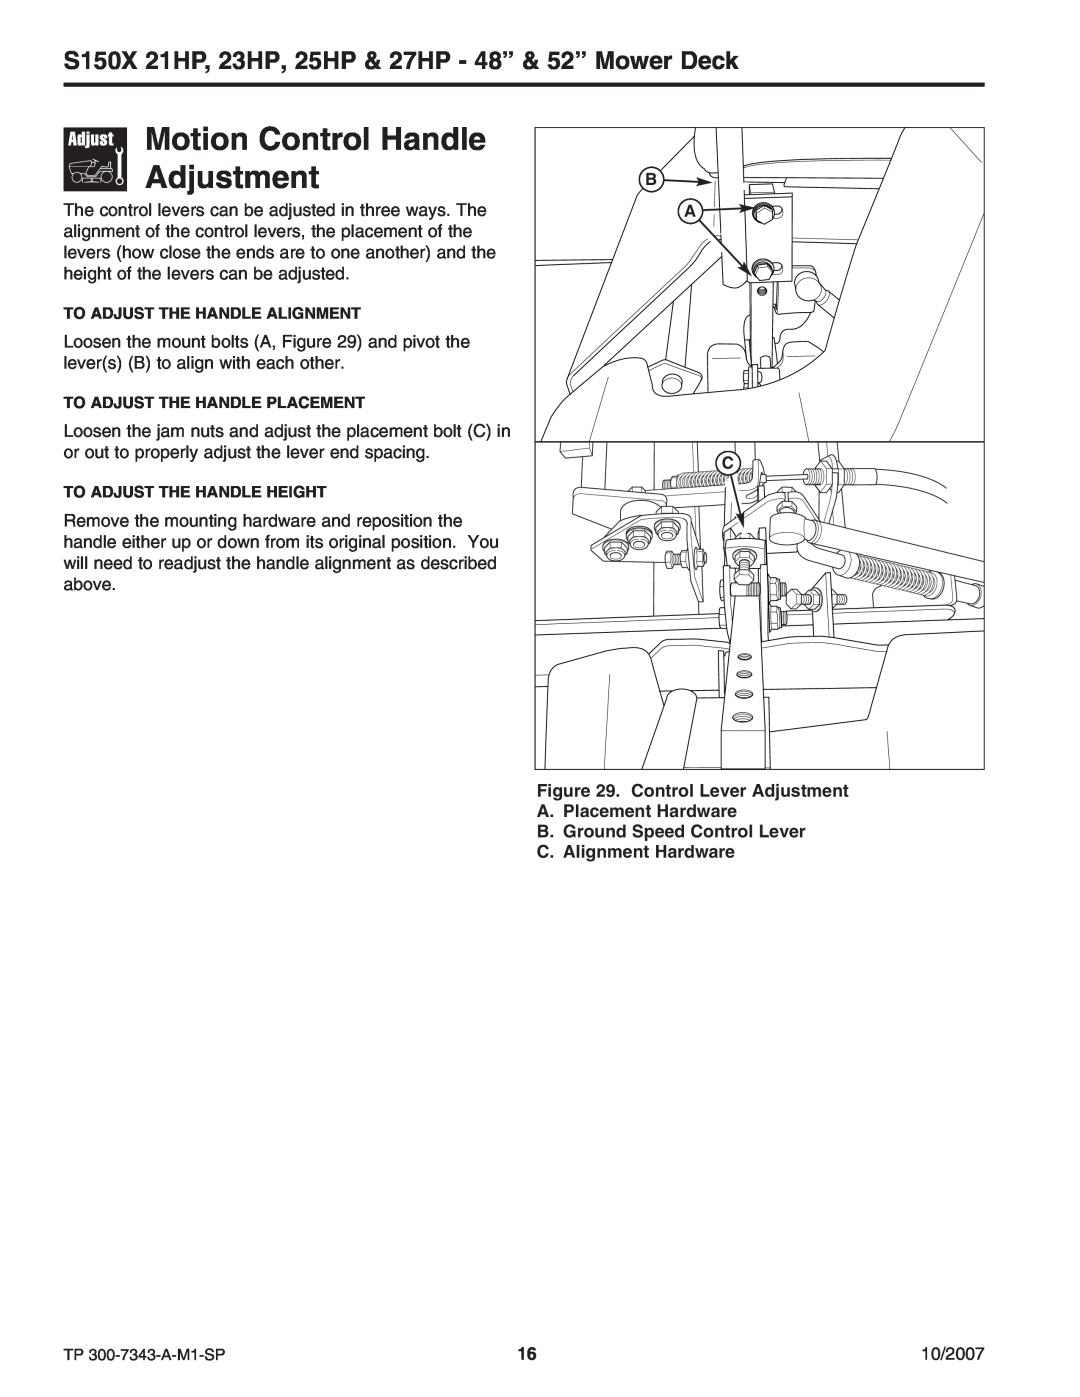 Snapper manual Motion Control Handle Adjustment, S150X 21HP, 23HP, 25HP & 27HP - 48” & 52” Mower Deck 